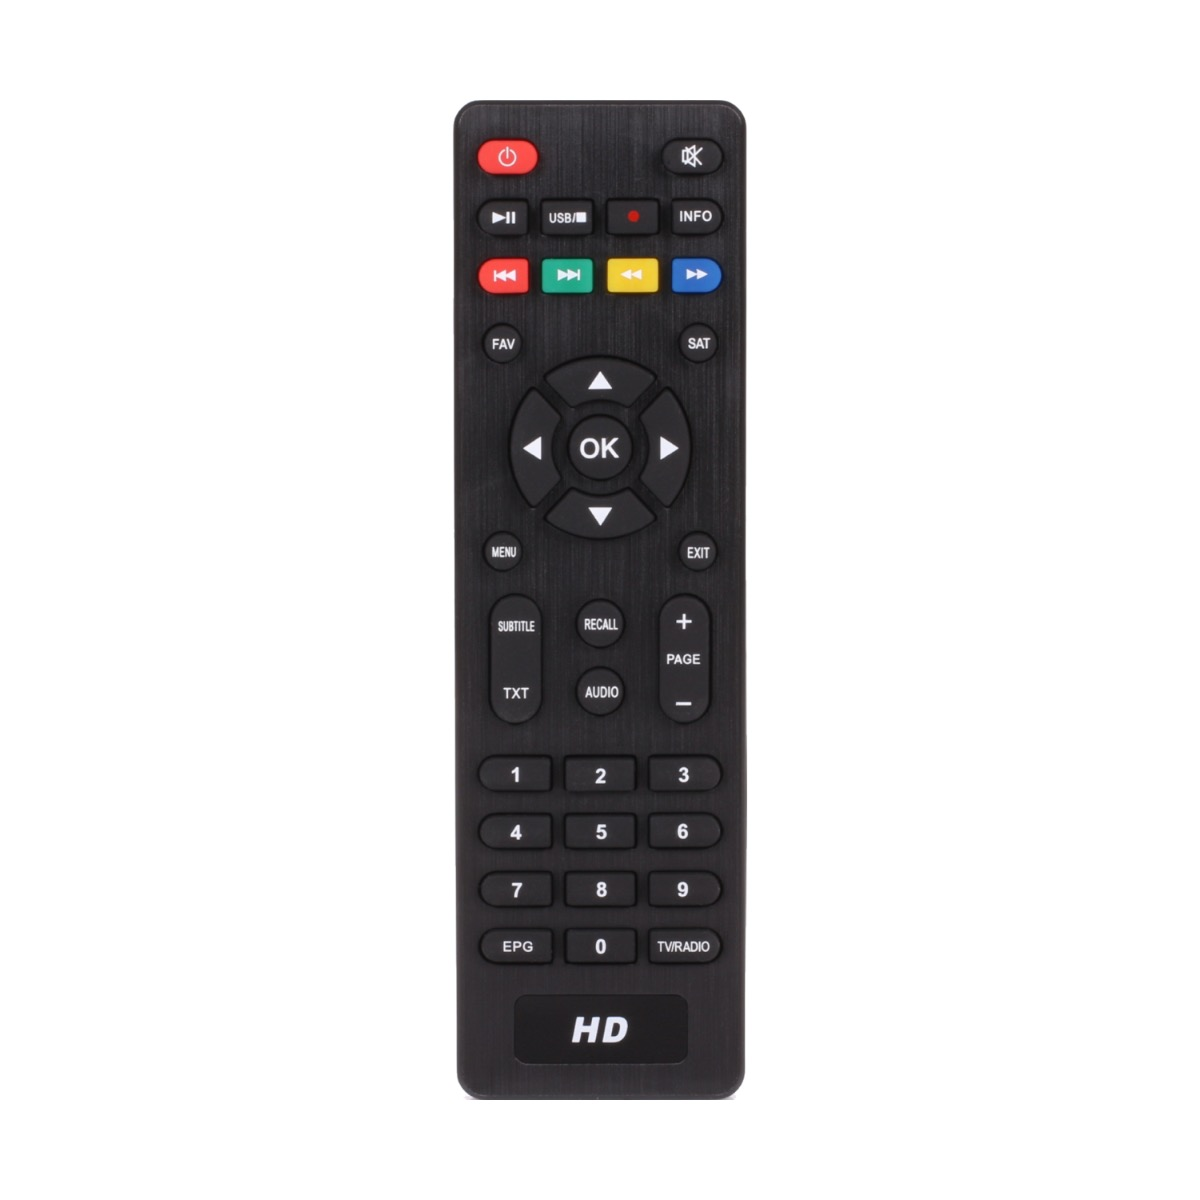 ANKARO ANK DSR 2100 mit Receiver DVB-C2, 1080p schwarz) Receiver, (HDTV, HD, PVR, PVR-Funktion, Sat DVB-S, Full DVB-T2 HDMI DVB-S2, Satelliten DVB-S2, (H.265), Digitaler